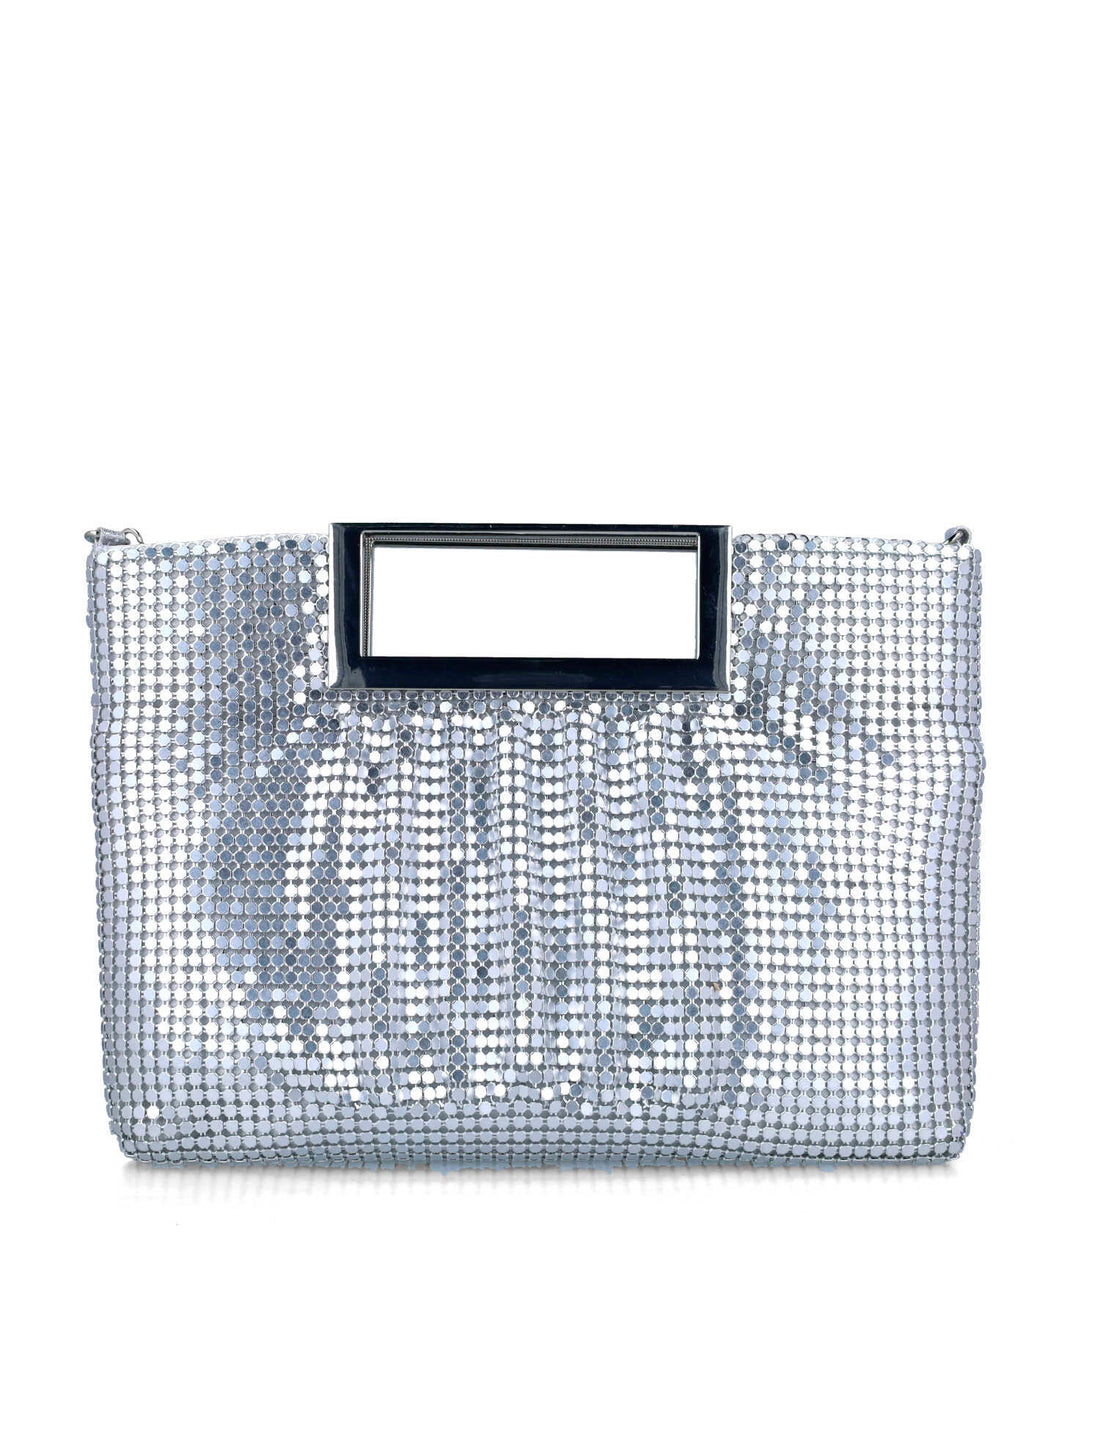 Silver Puffy Handbag With Metallic Handle_85560_09_01